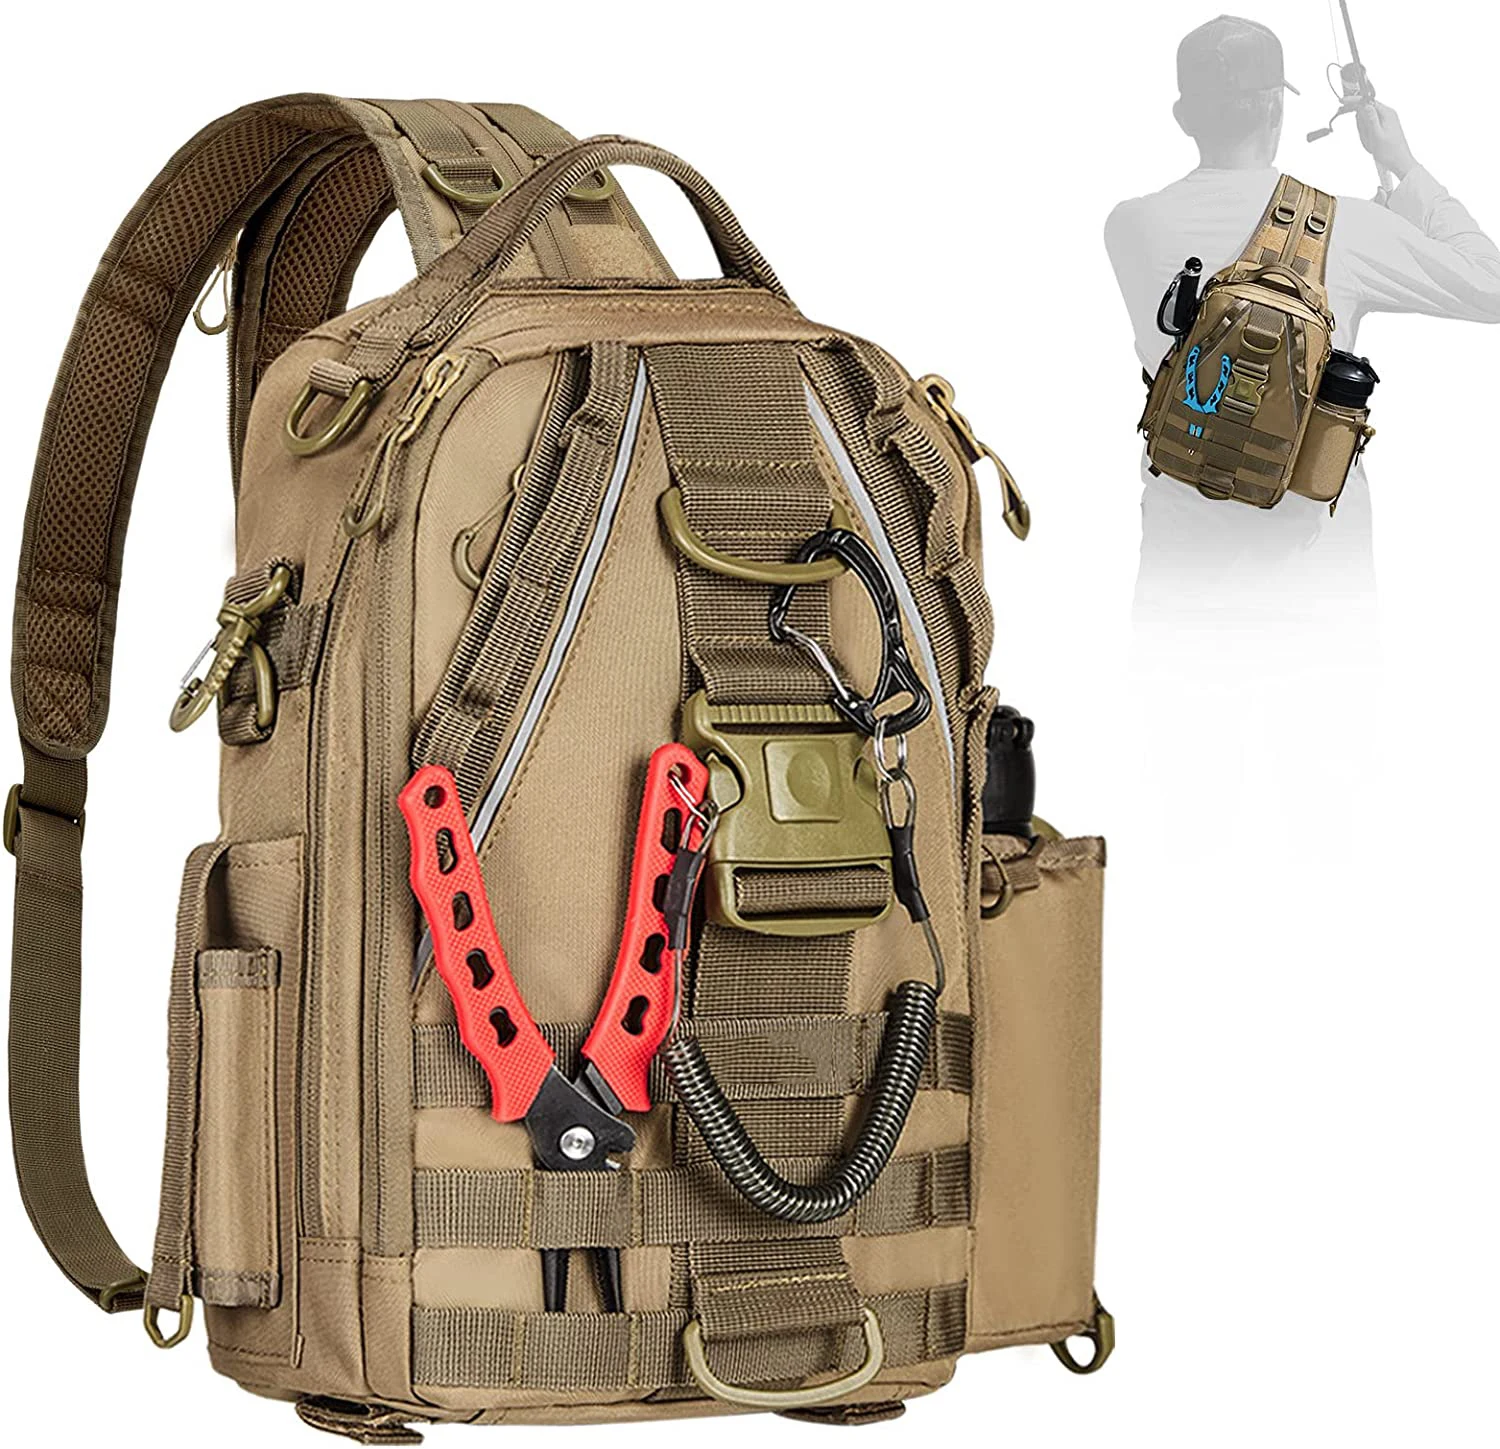 Outdoor shoulder carry fish gear bag